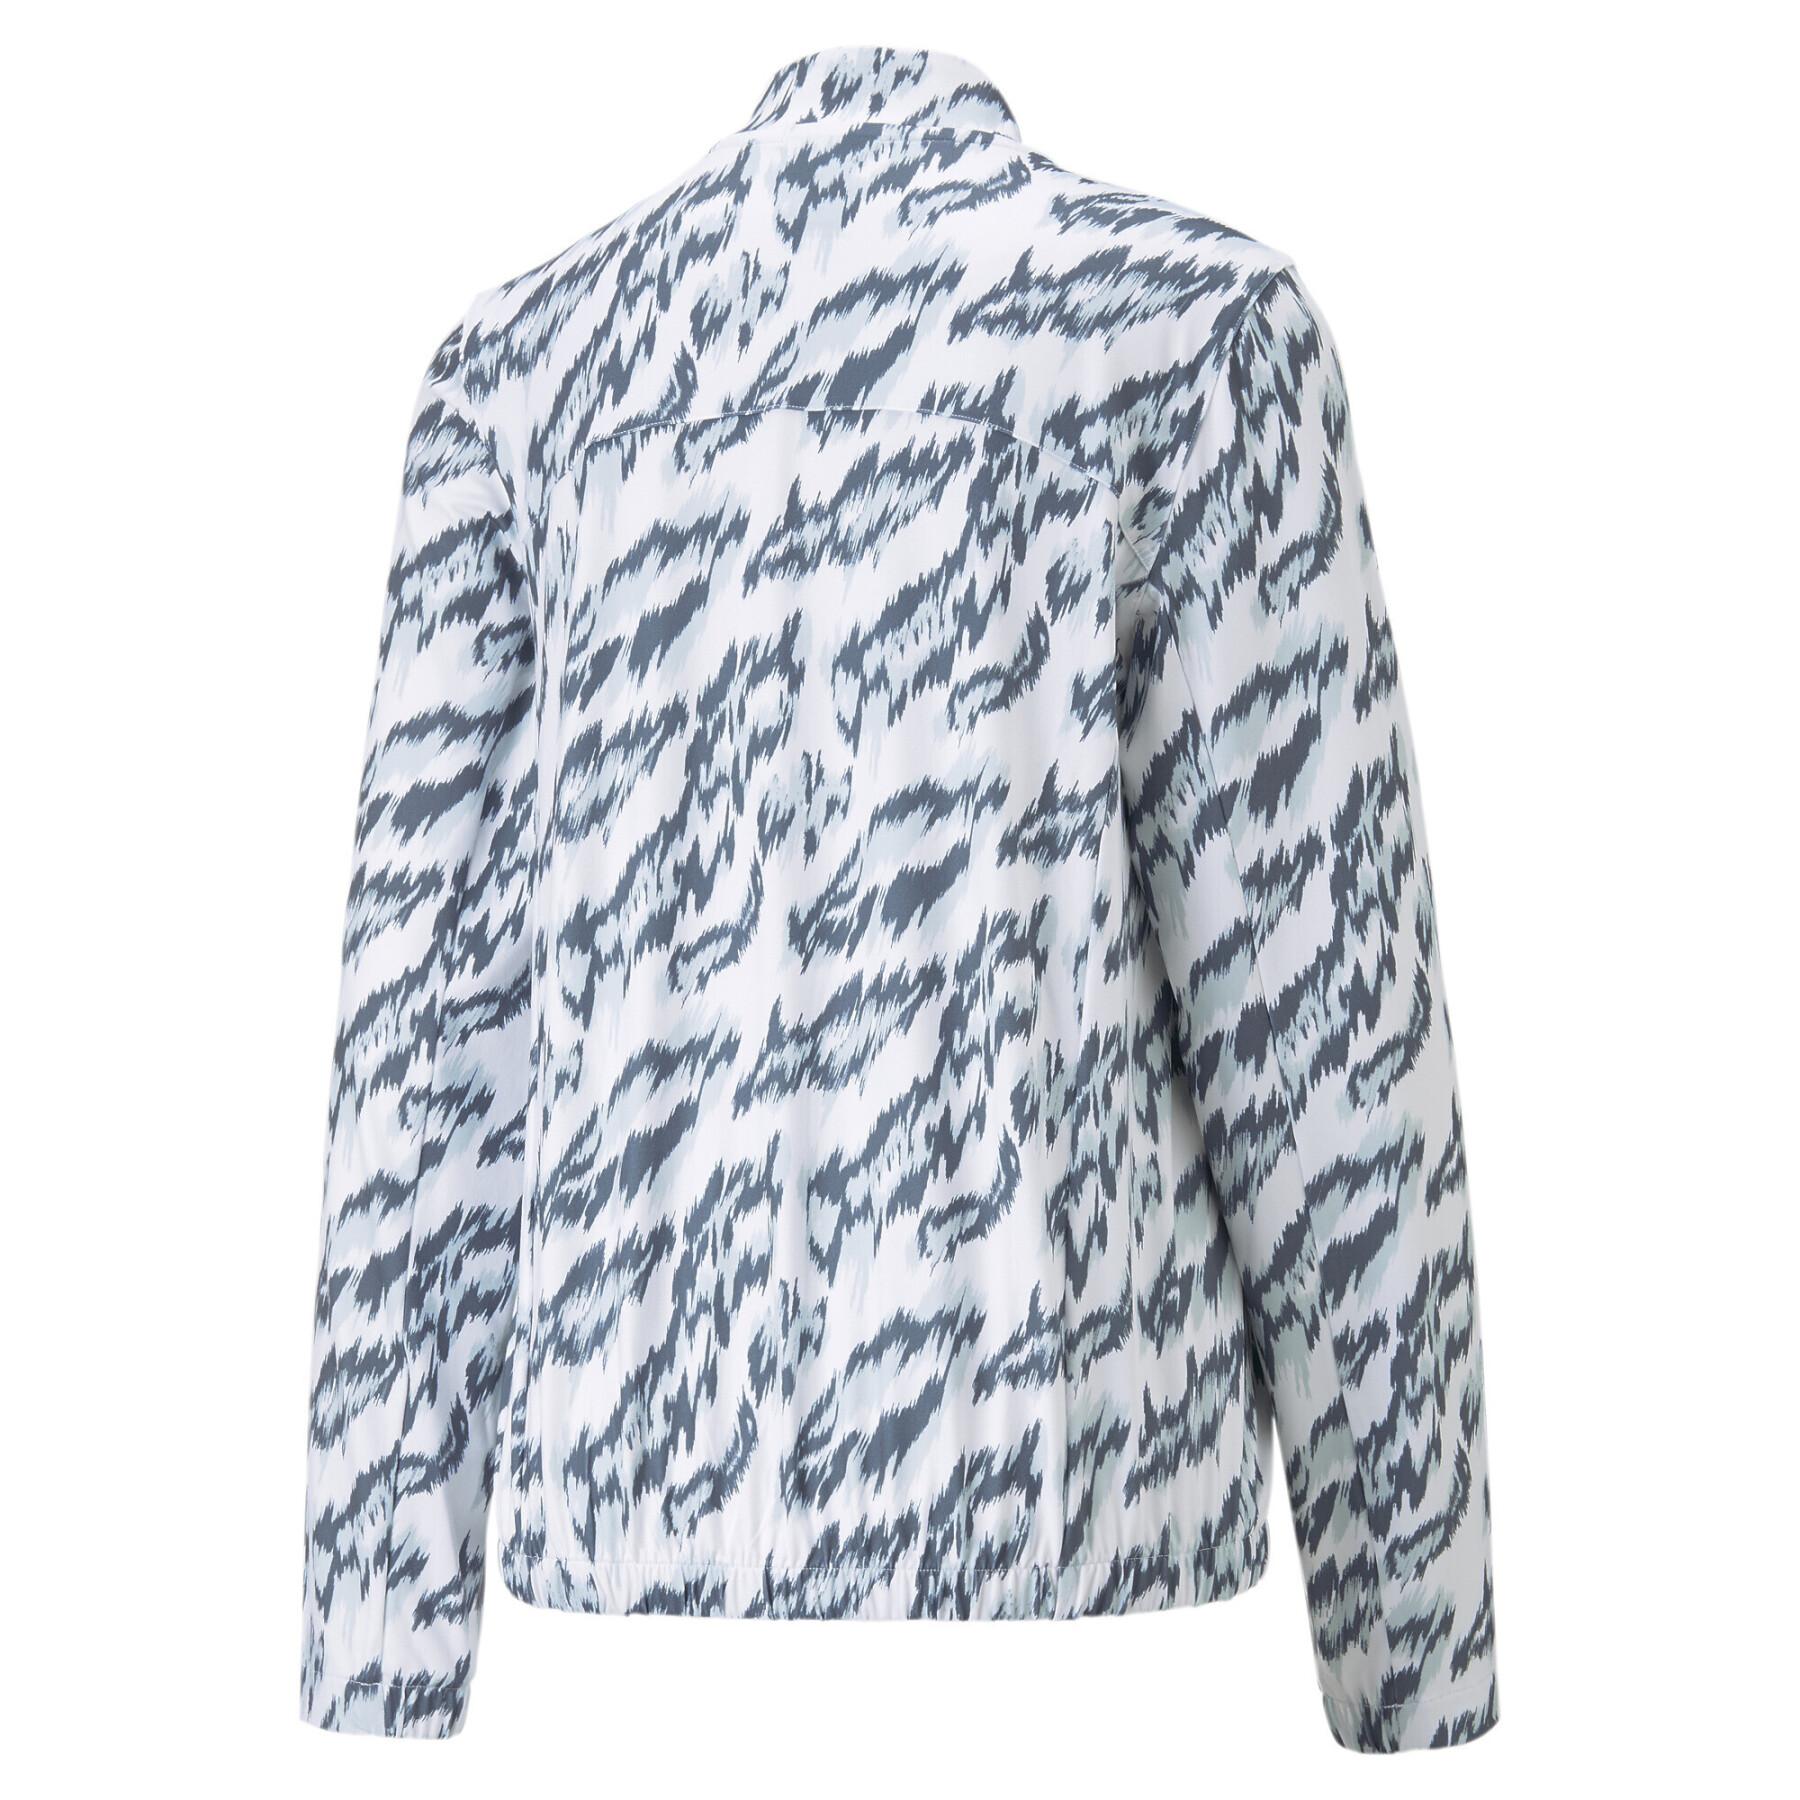 Women's waterproof jacket Puma Cloudspun Animal Print